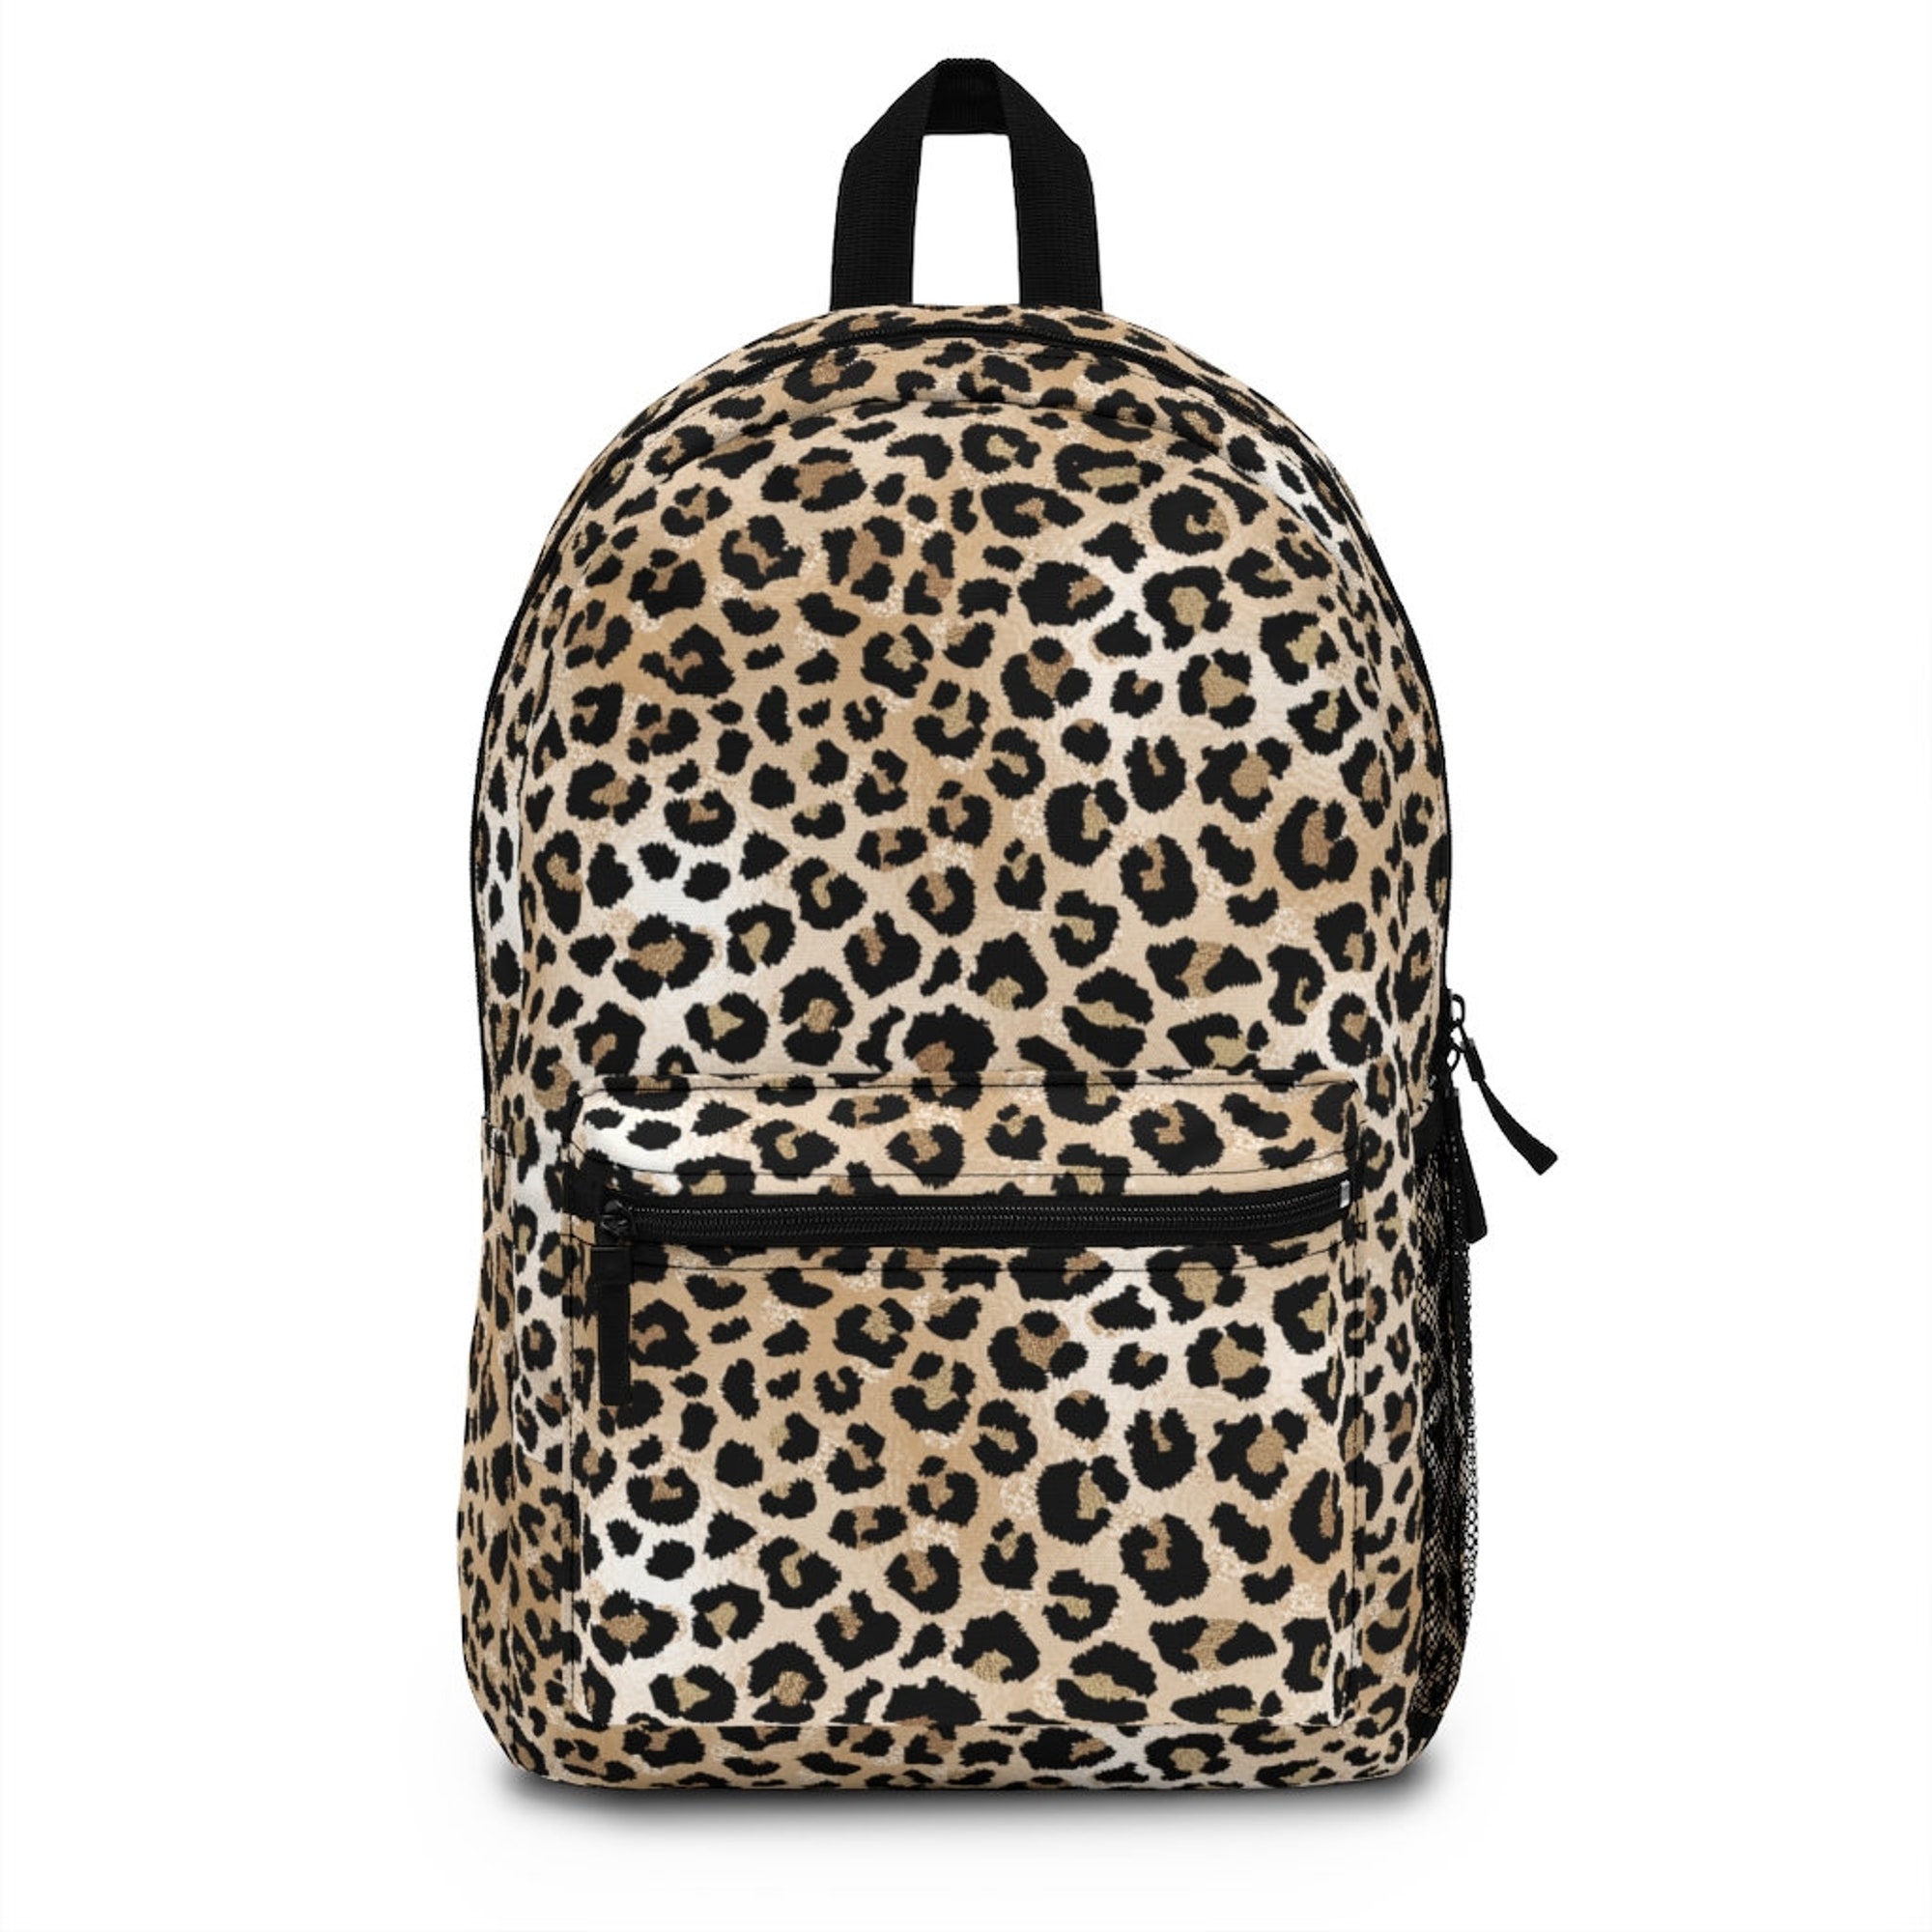 Leopard Print Animal Cheetah Backpack